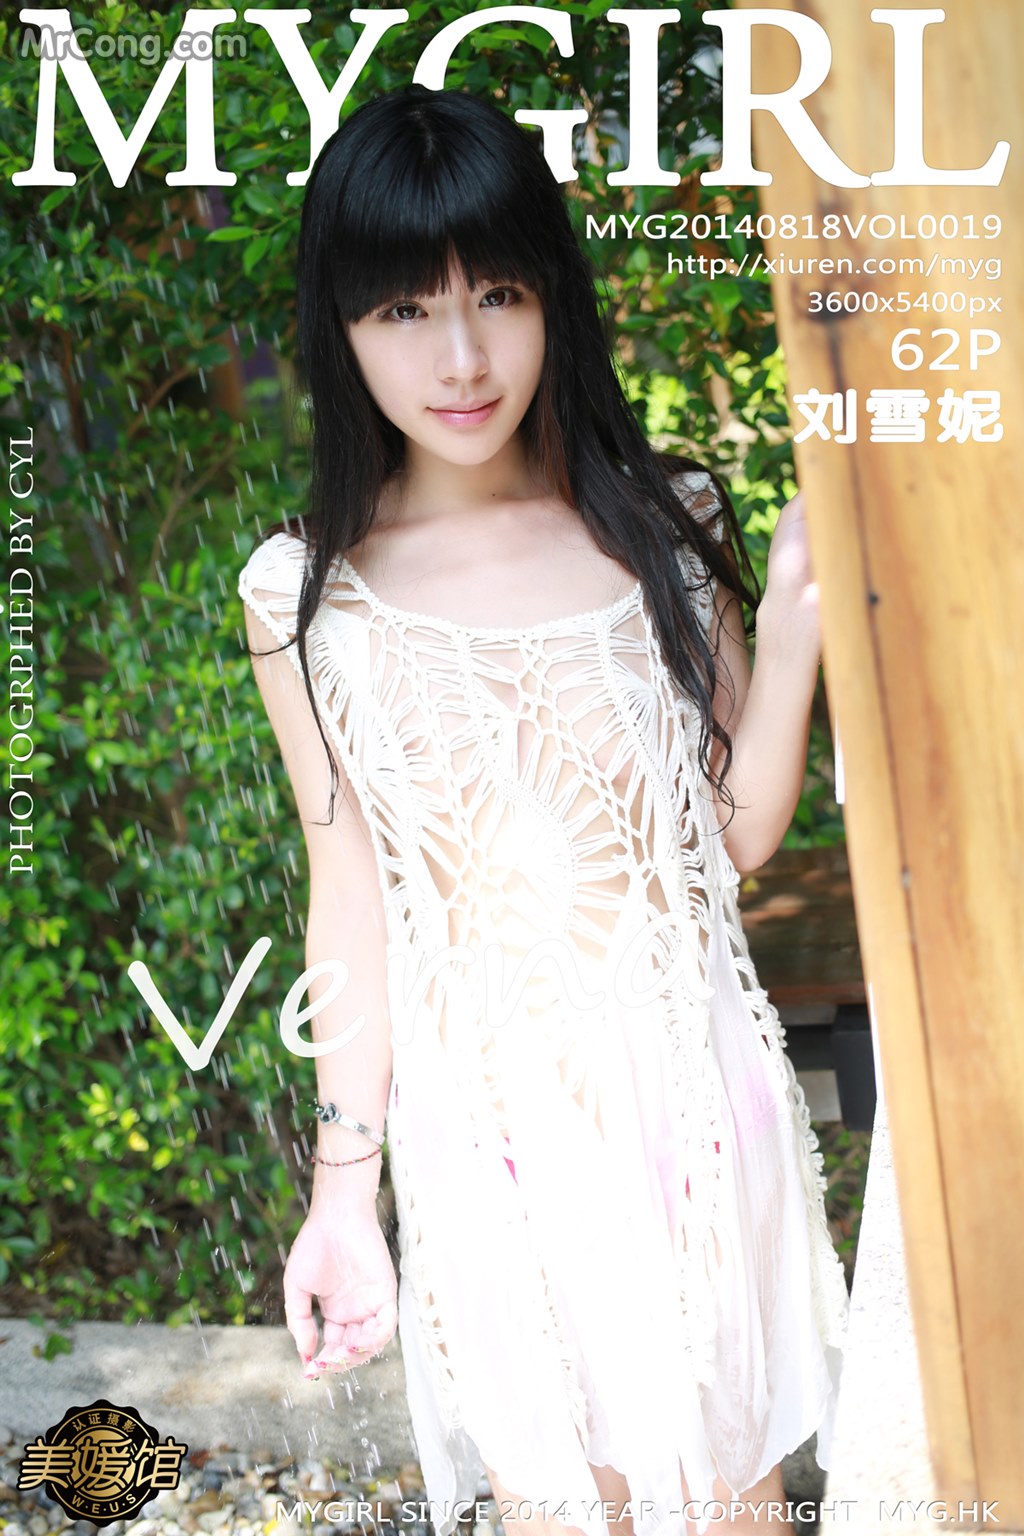 MyGirl Vol.019: Verna Model (刘雪 妮) (63 photos) photo 1-0